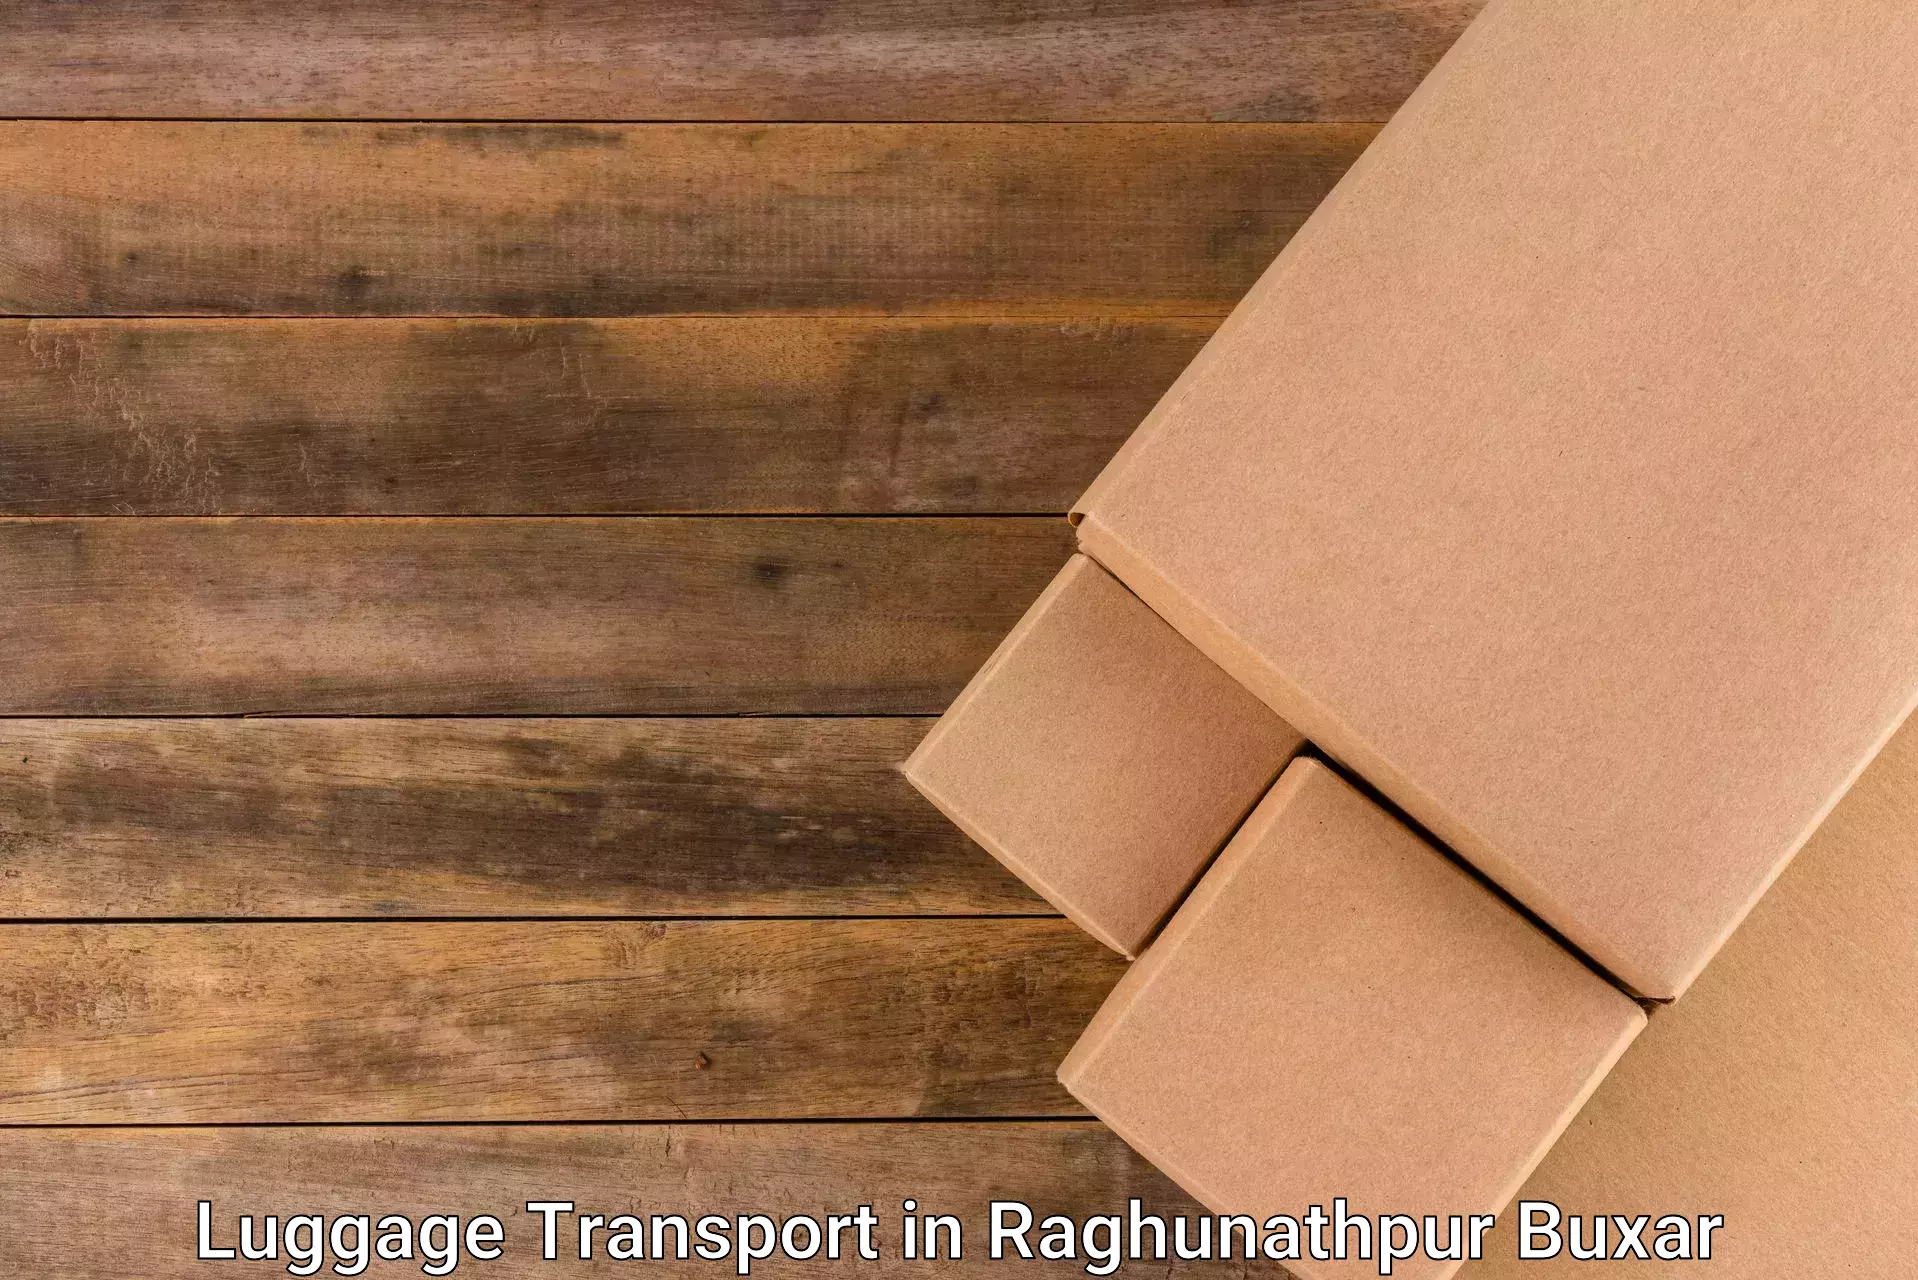 Emergency baggage service in Raghunathpur Buxar